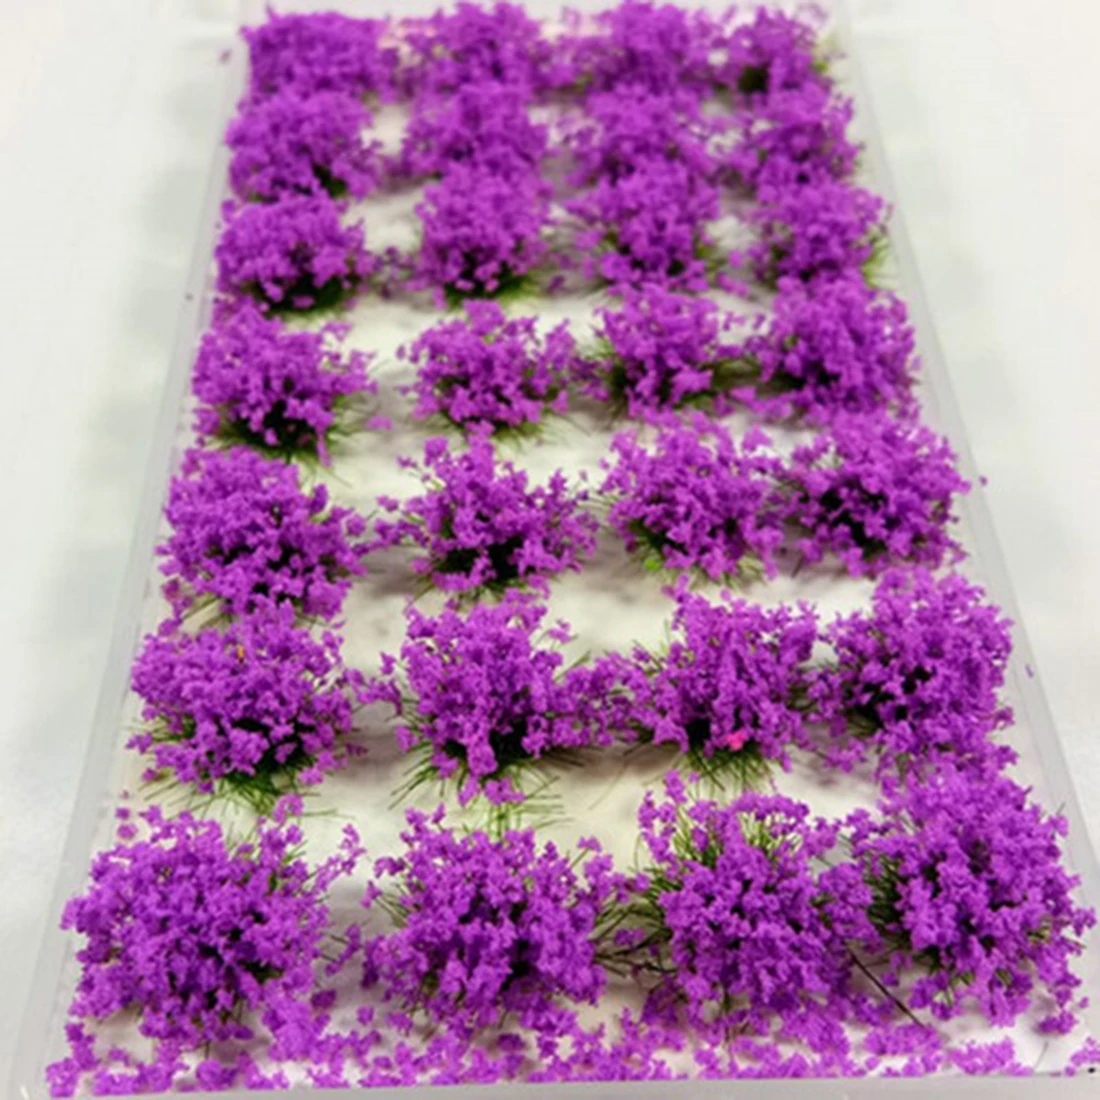 Novi simulacijski model cvjetne klastera Flowers Scene Model For 1:35/1:48/1:72/1:87 Scale Sand Table Miniature Decor - crvene boje